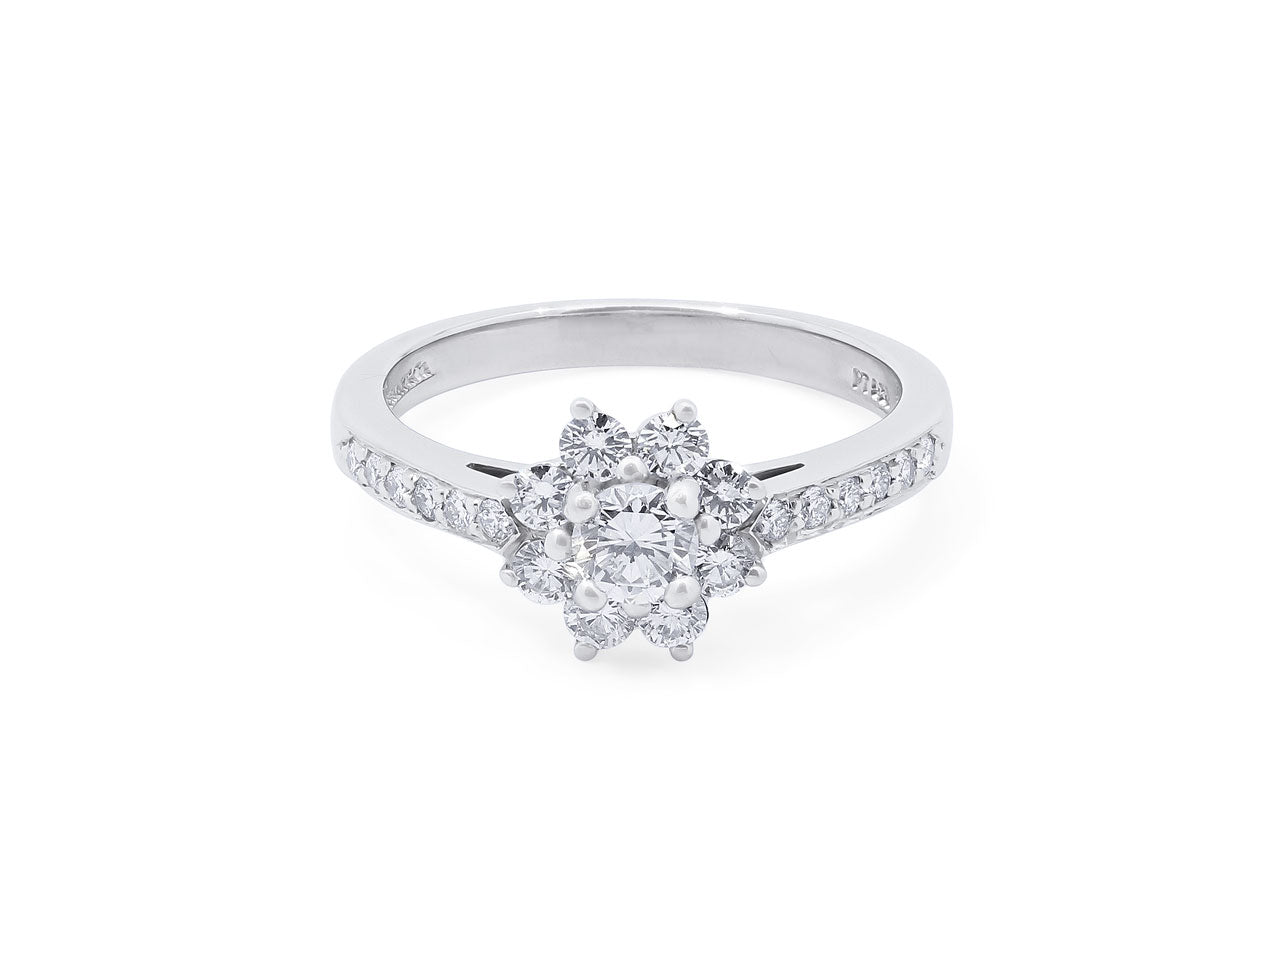 Tiffany & Co. Diamond Flower Ring in Platinum